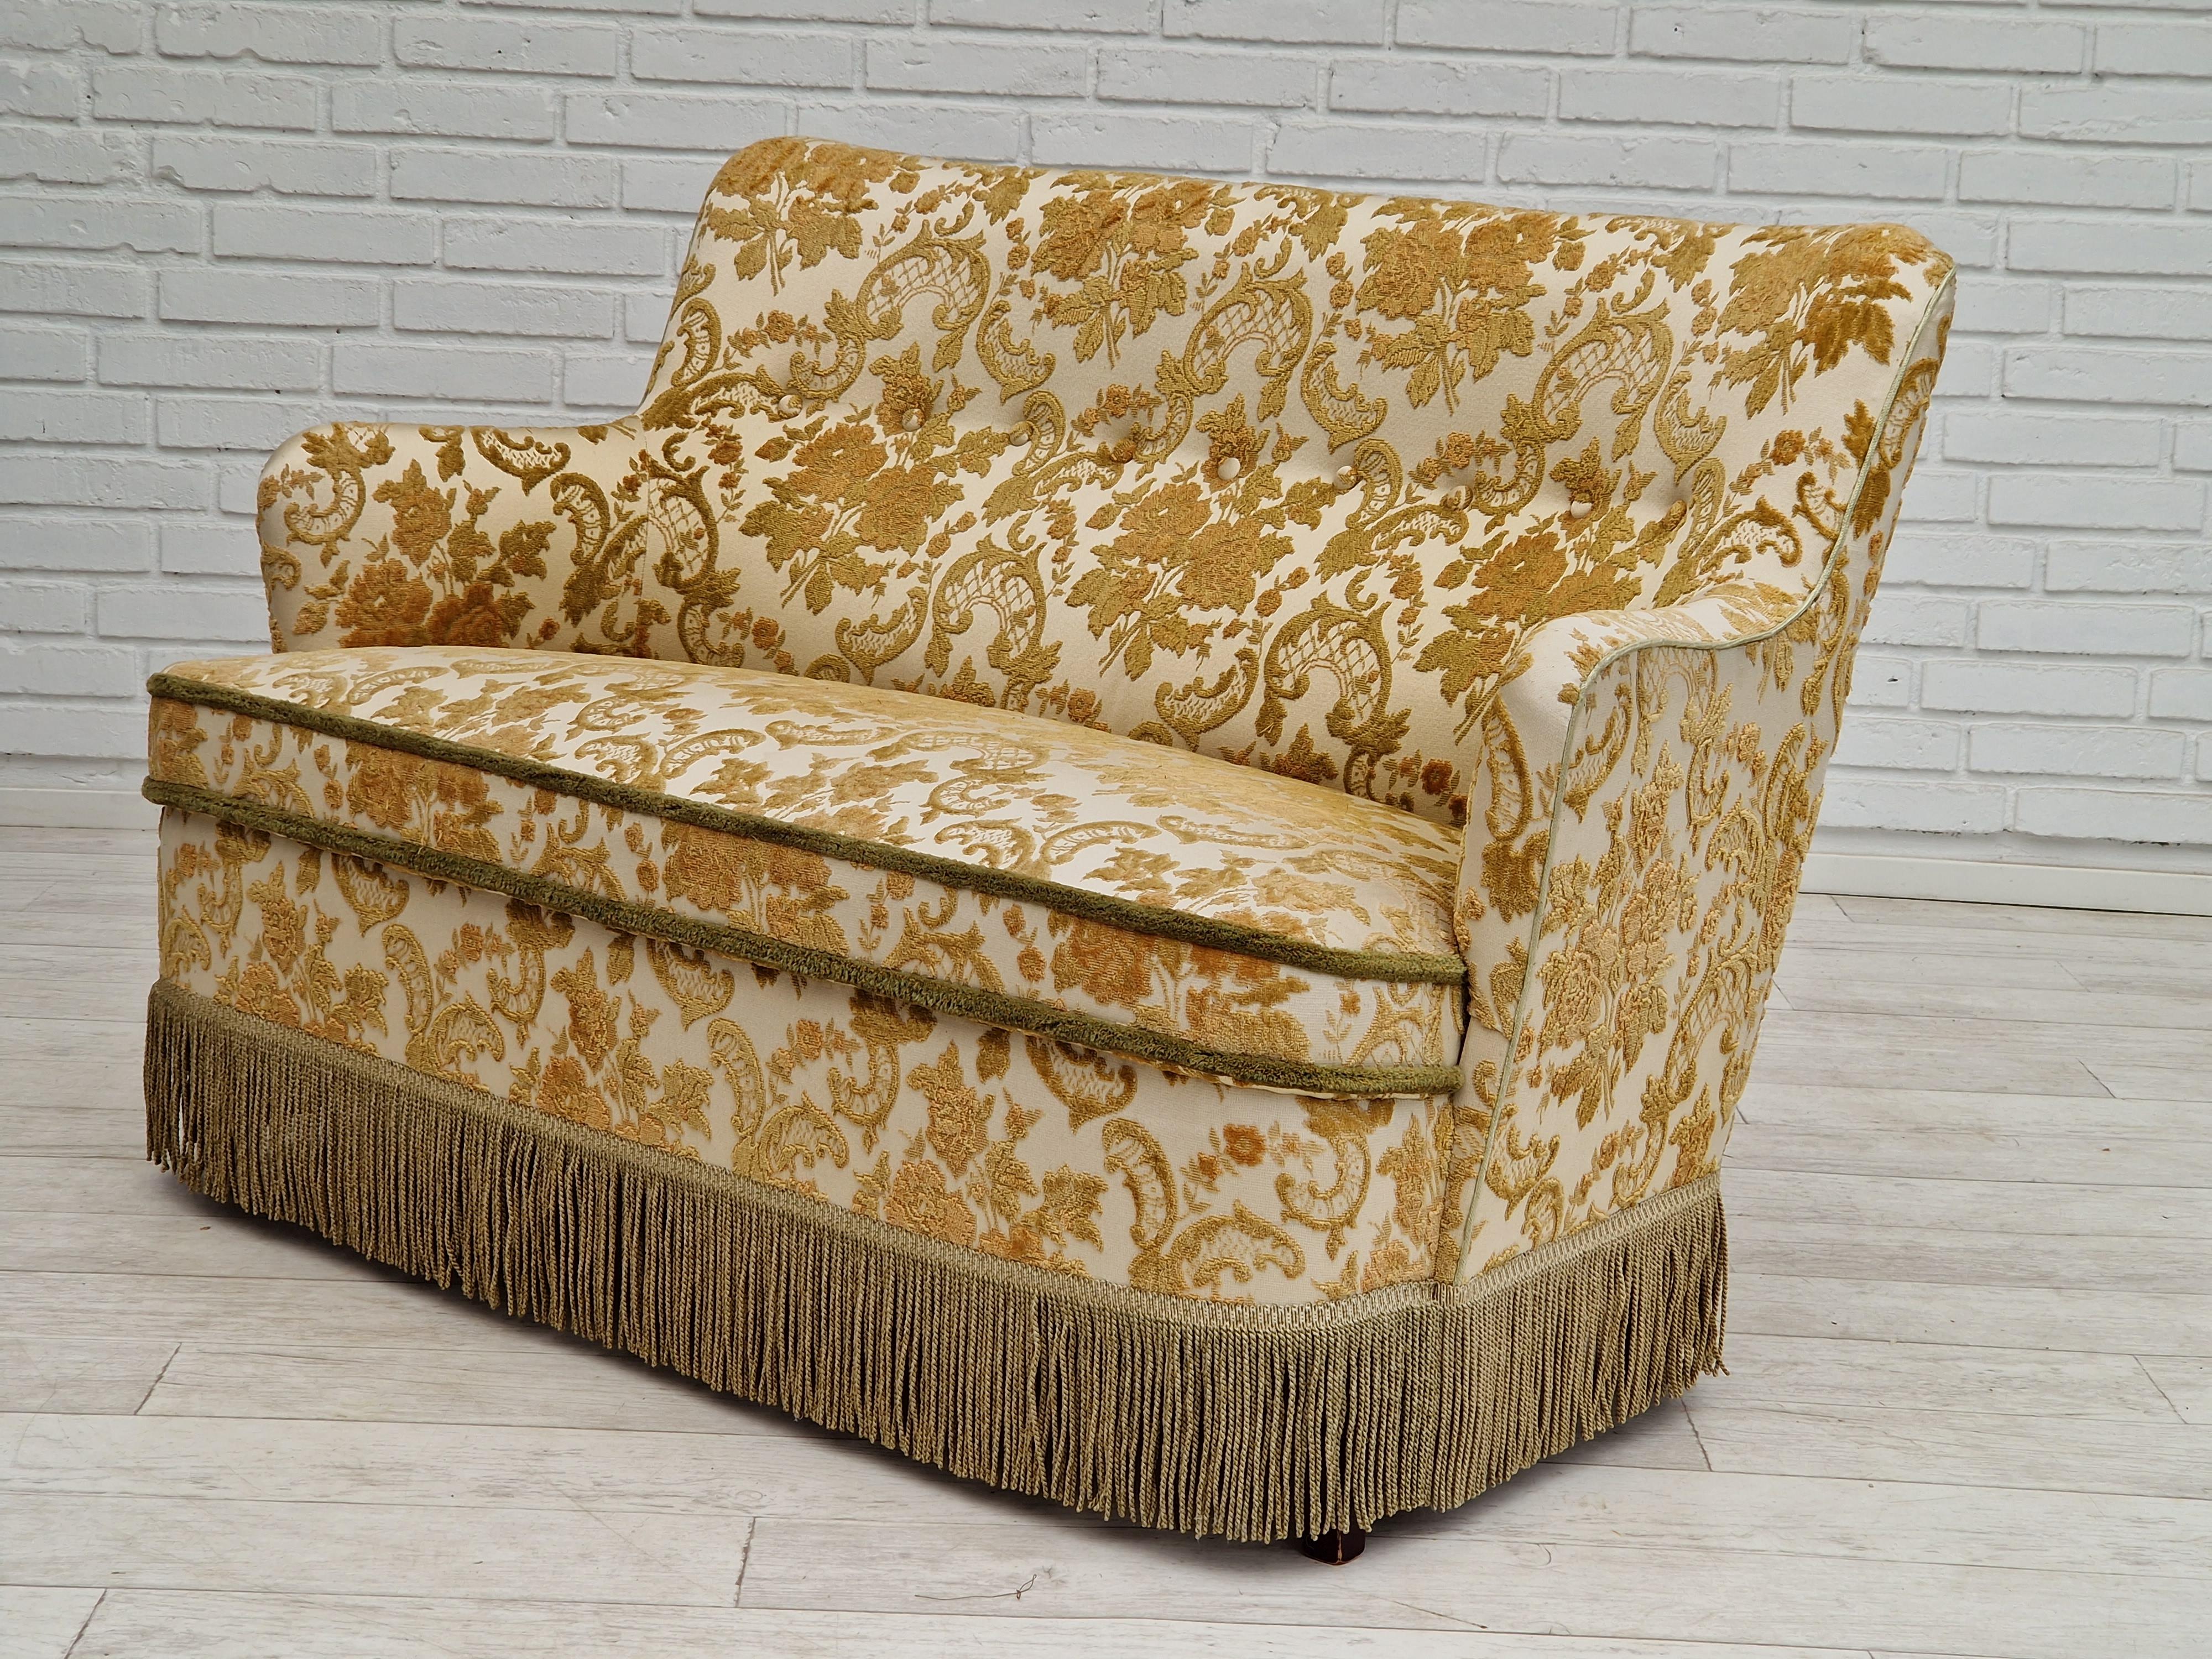 1960s, Danish velour 2 seater sofa, original condition, beech wood. 4